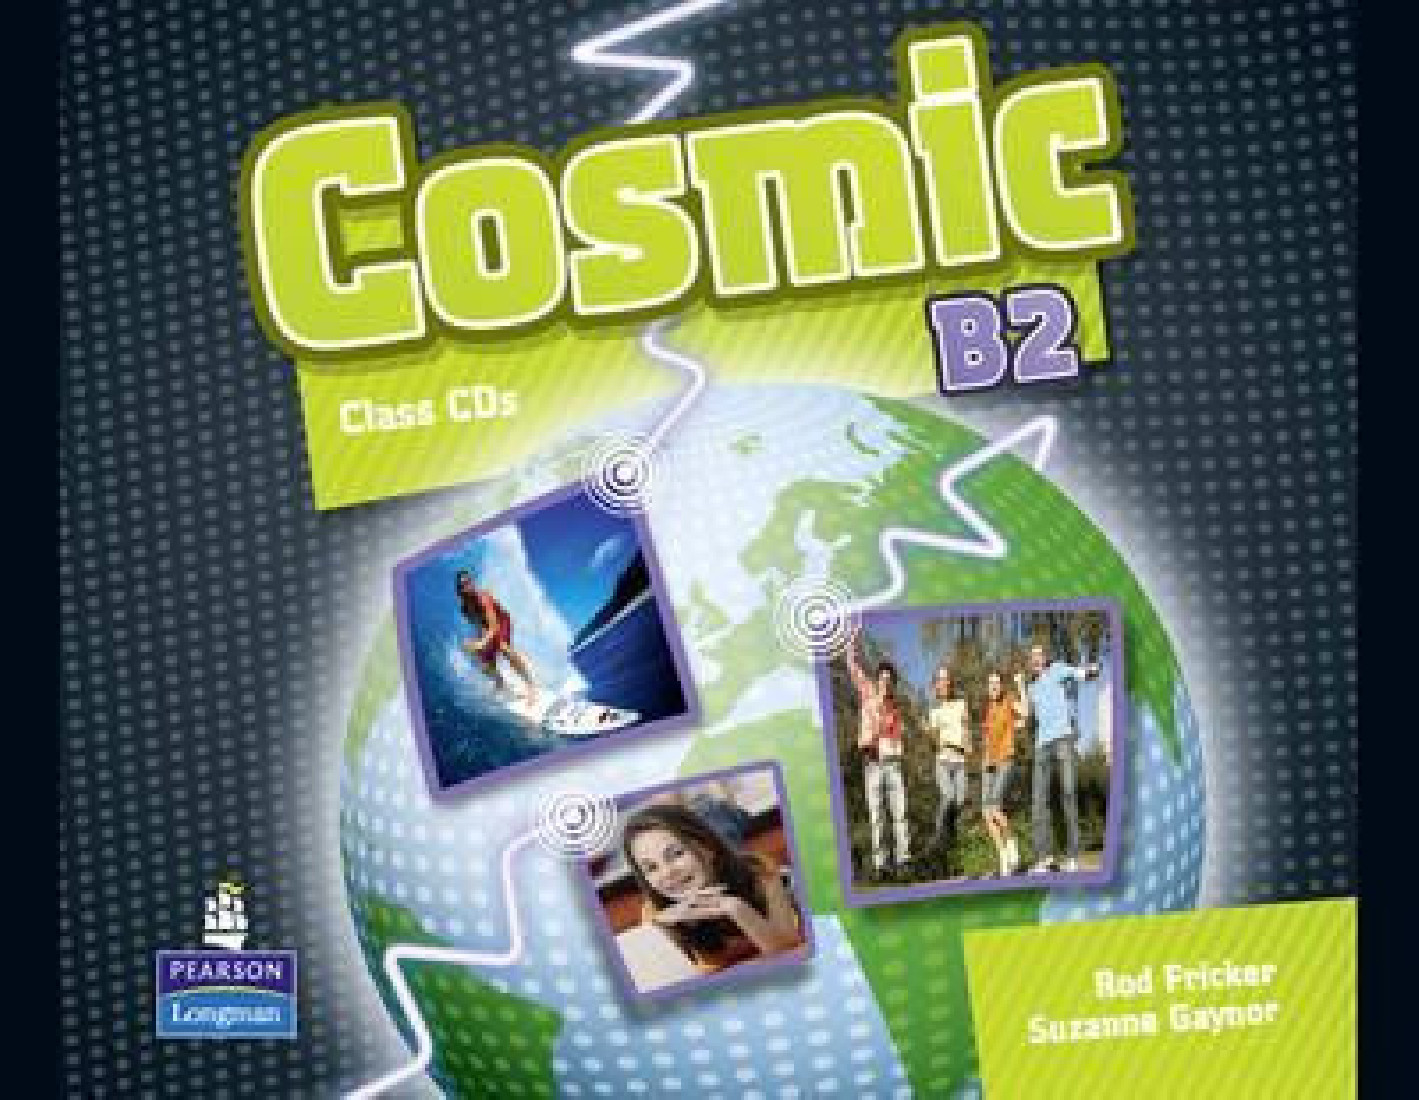 COSMIC B2 CLASS CDs(3)